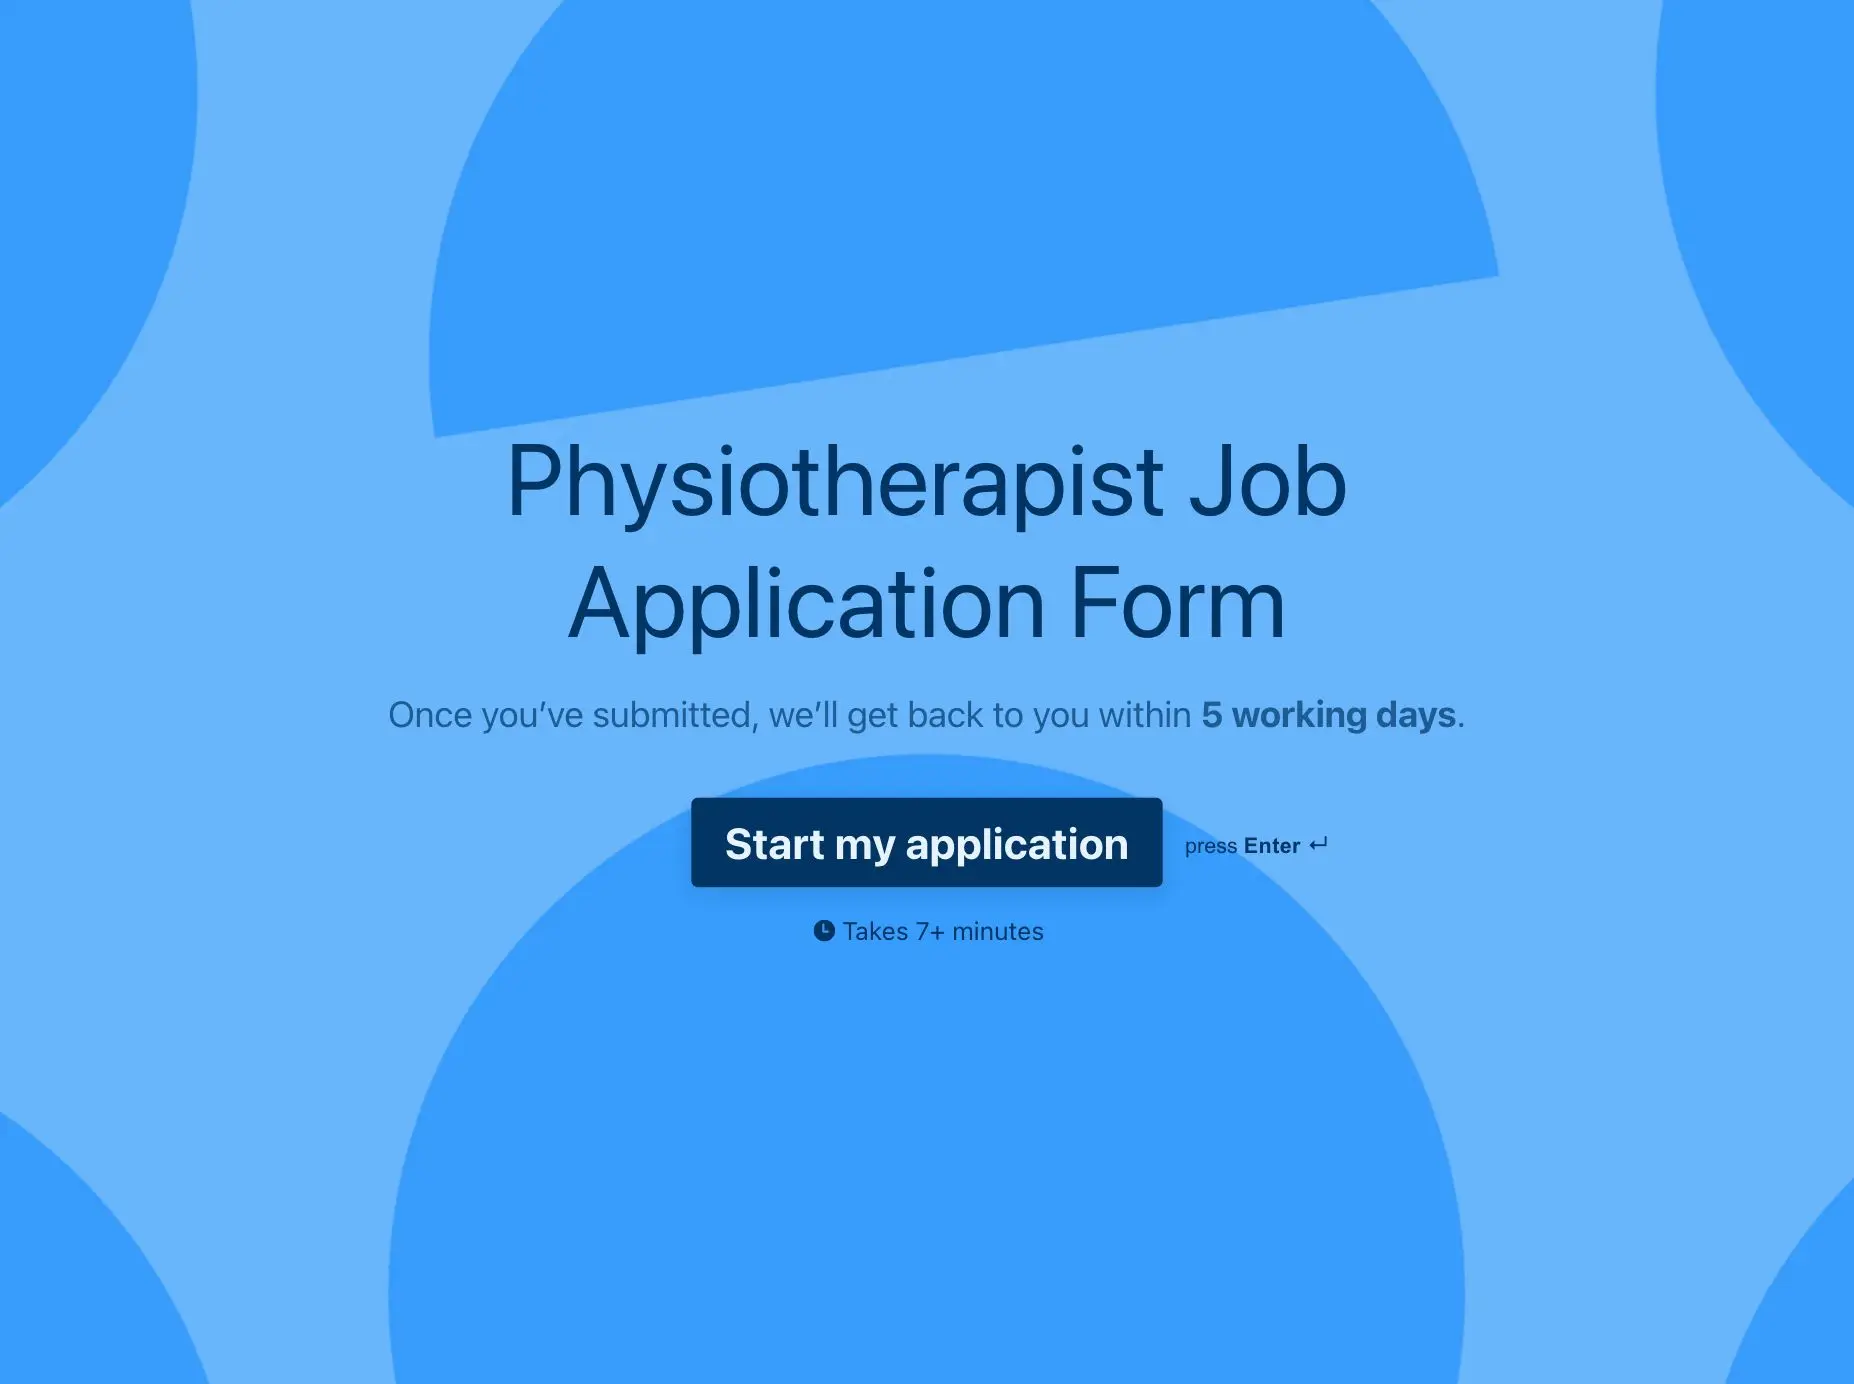 Physiotherapist Job Application Form Template Hero